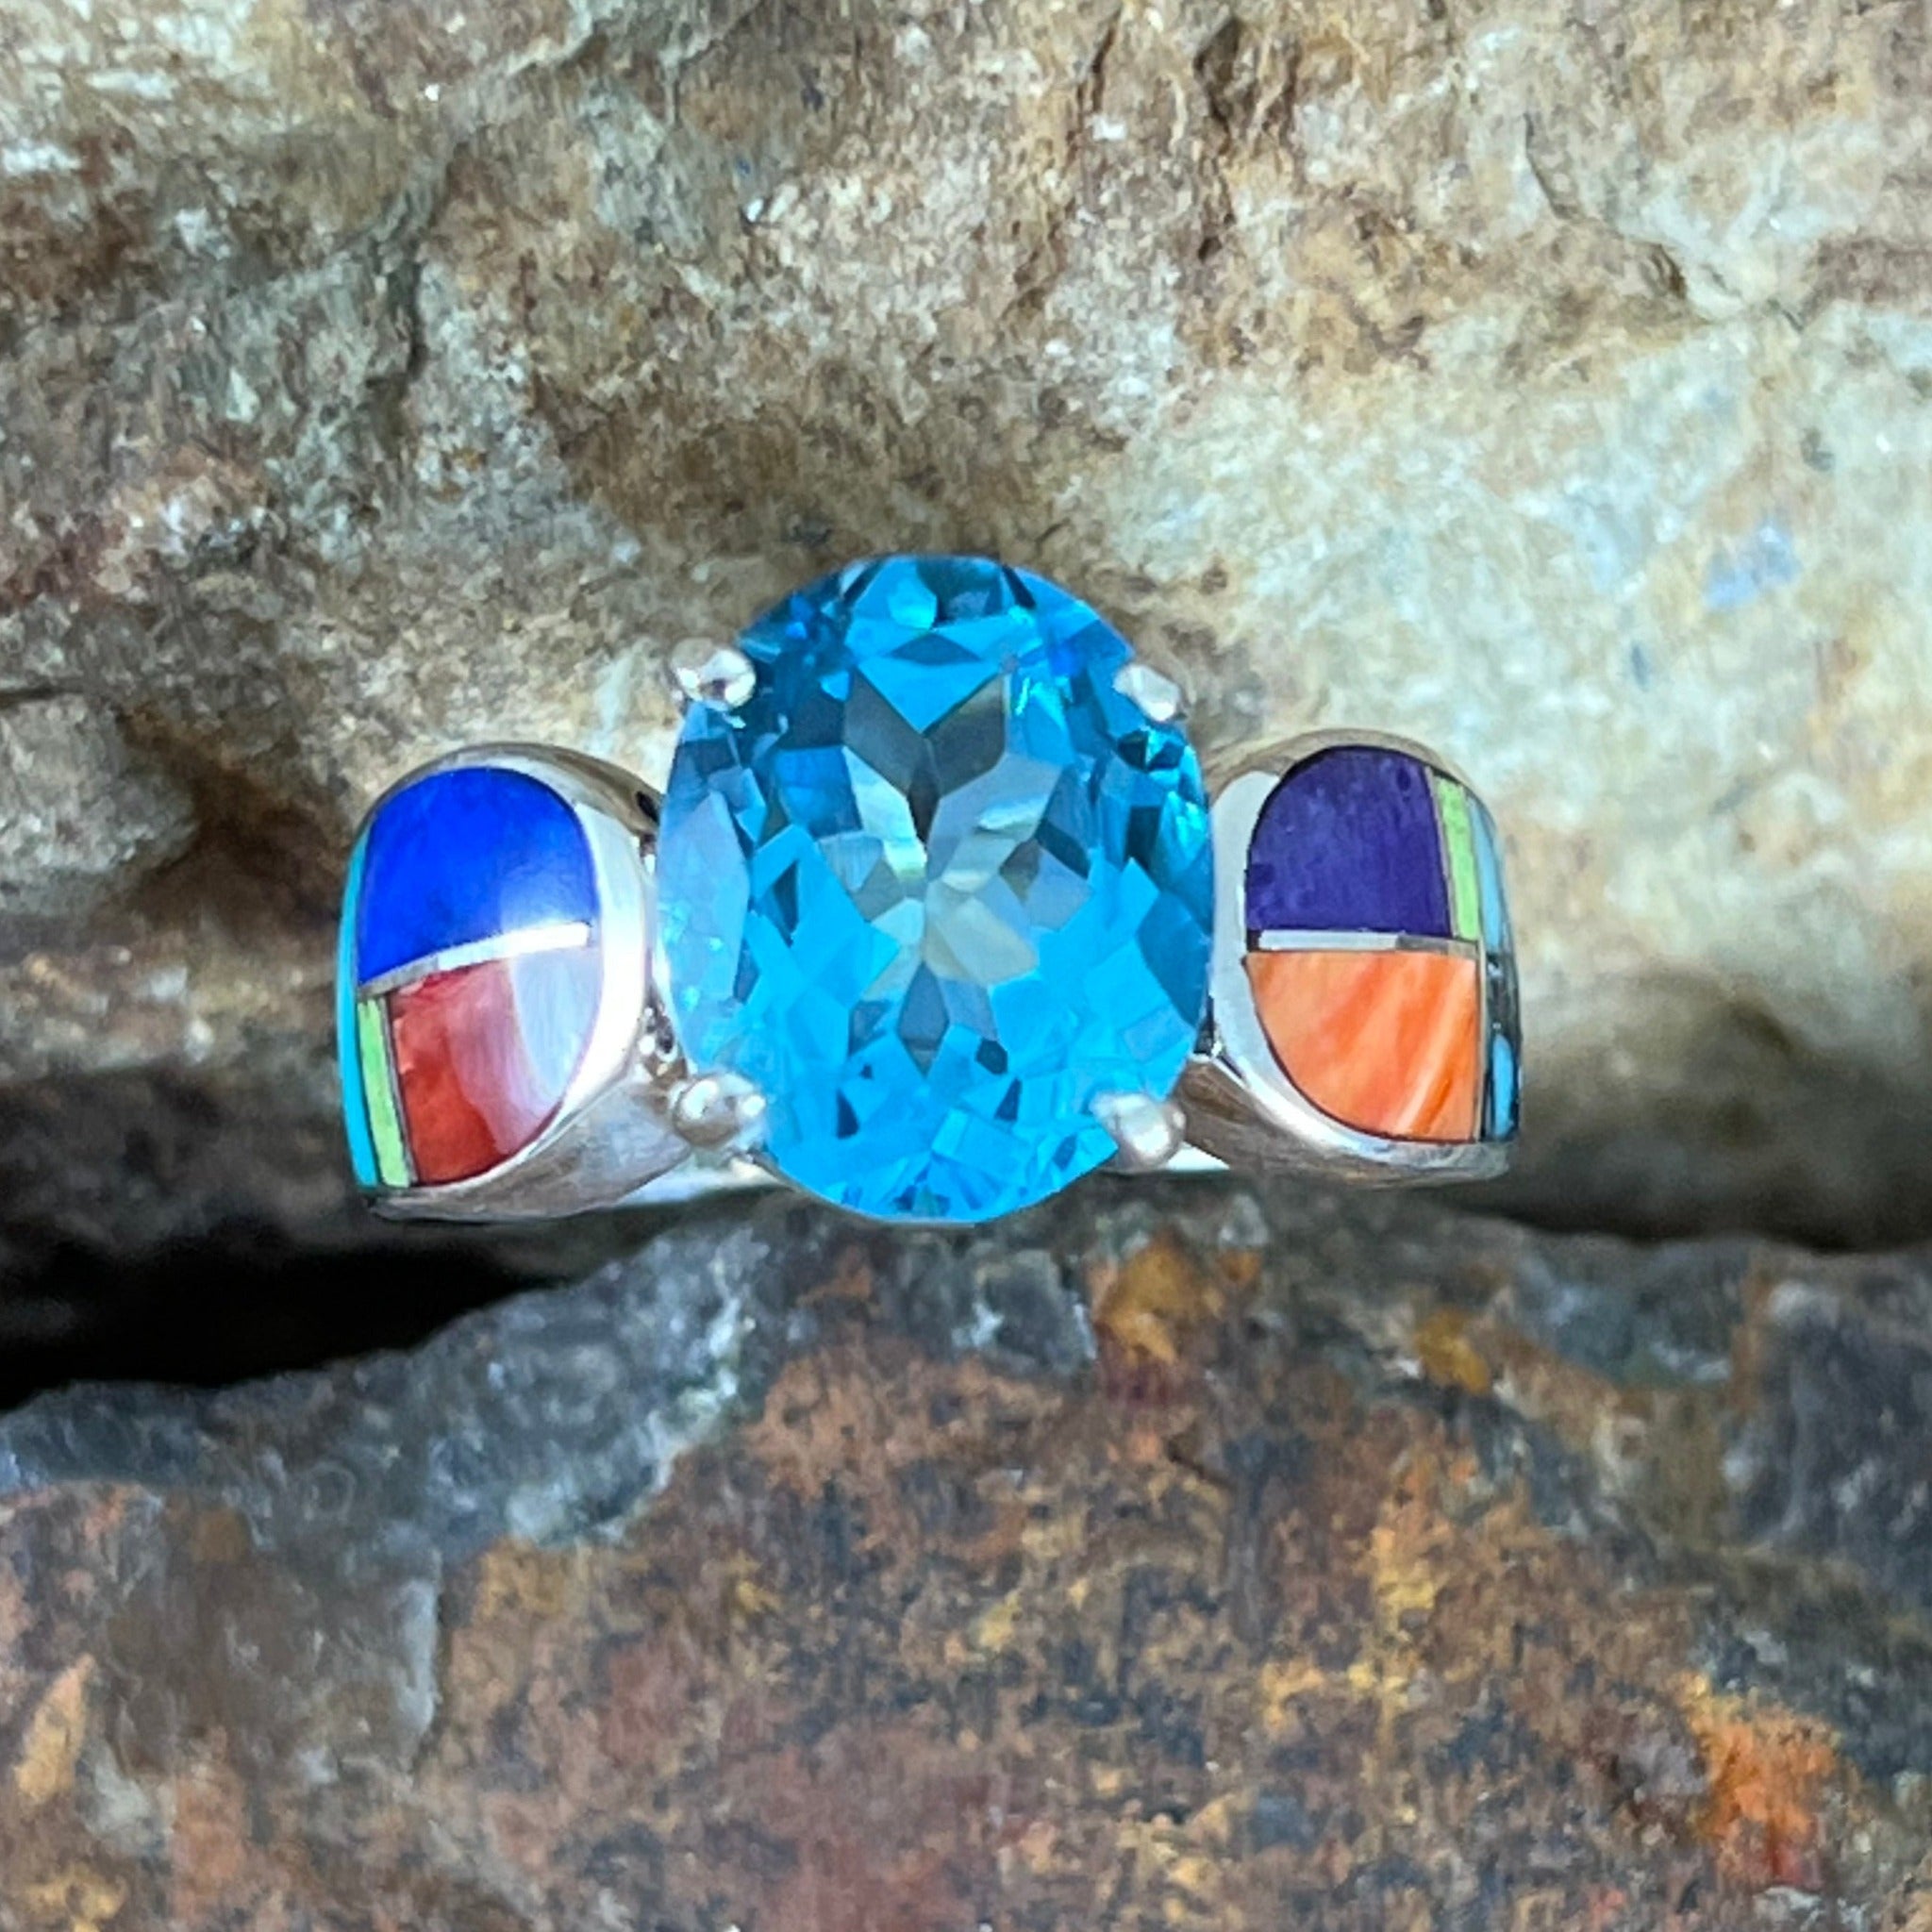 David Rosales Arizona Blue Inlaid Sterling Silver Ring w/ Blue Topaz